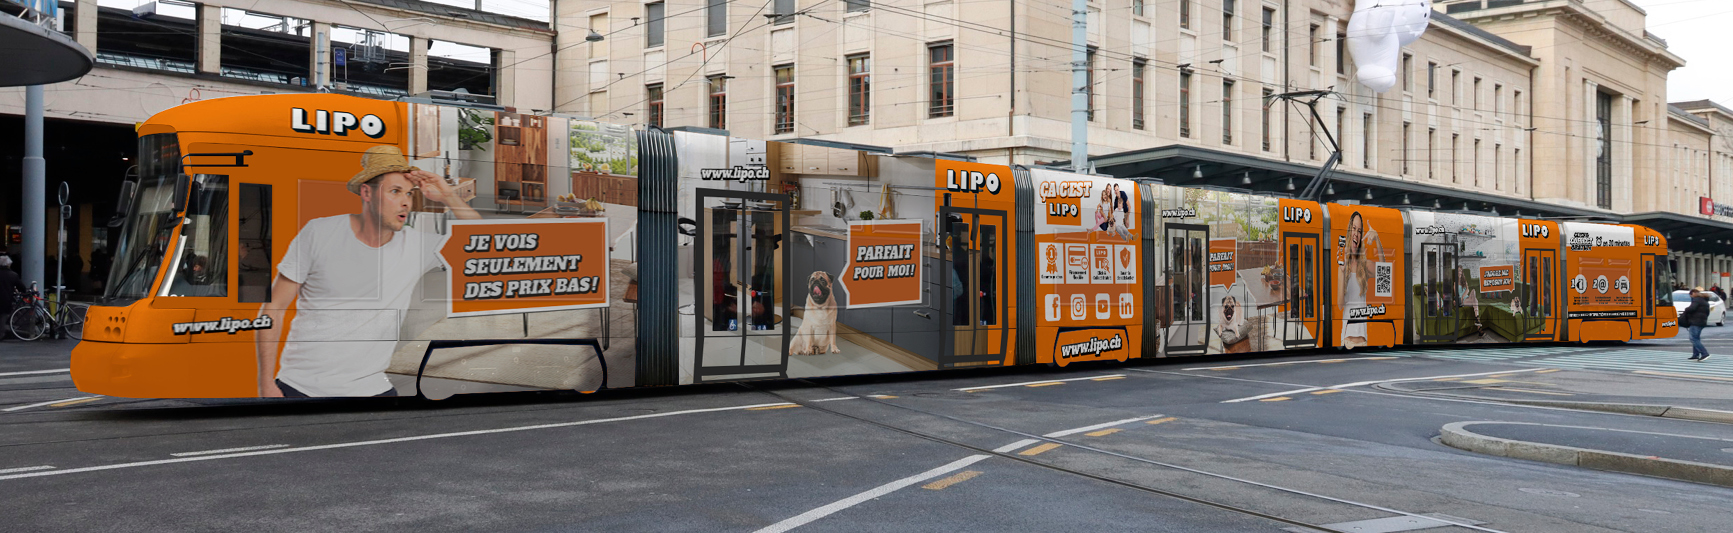 LIPO-Tram (Cityrunner) in Genf